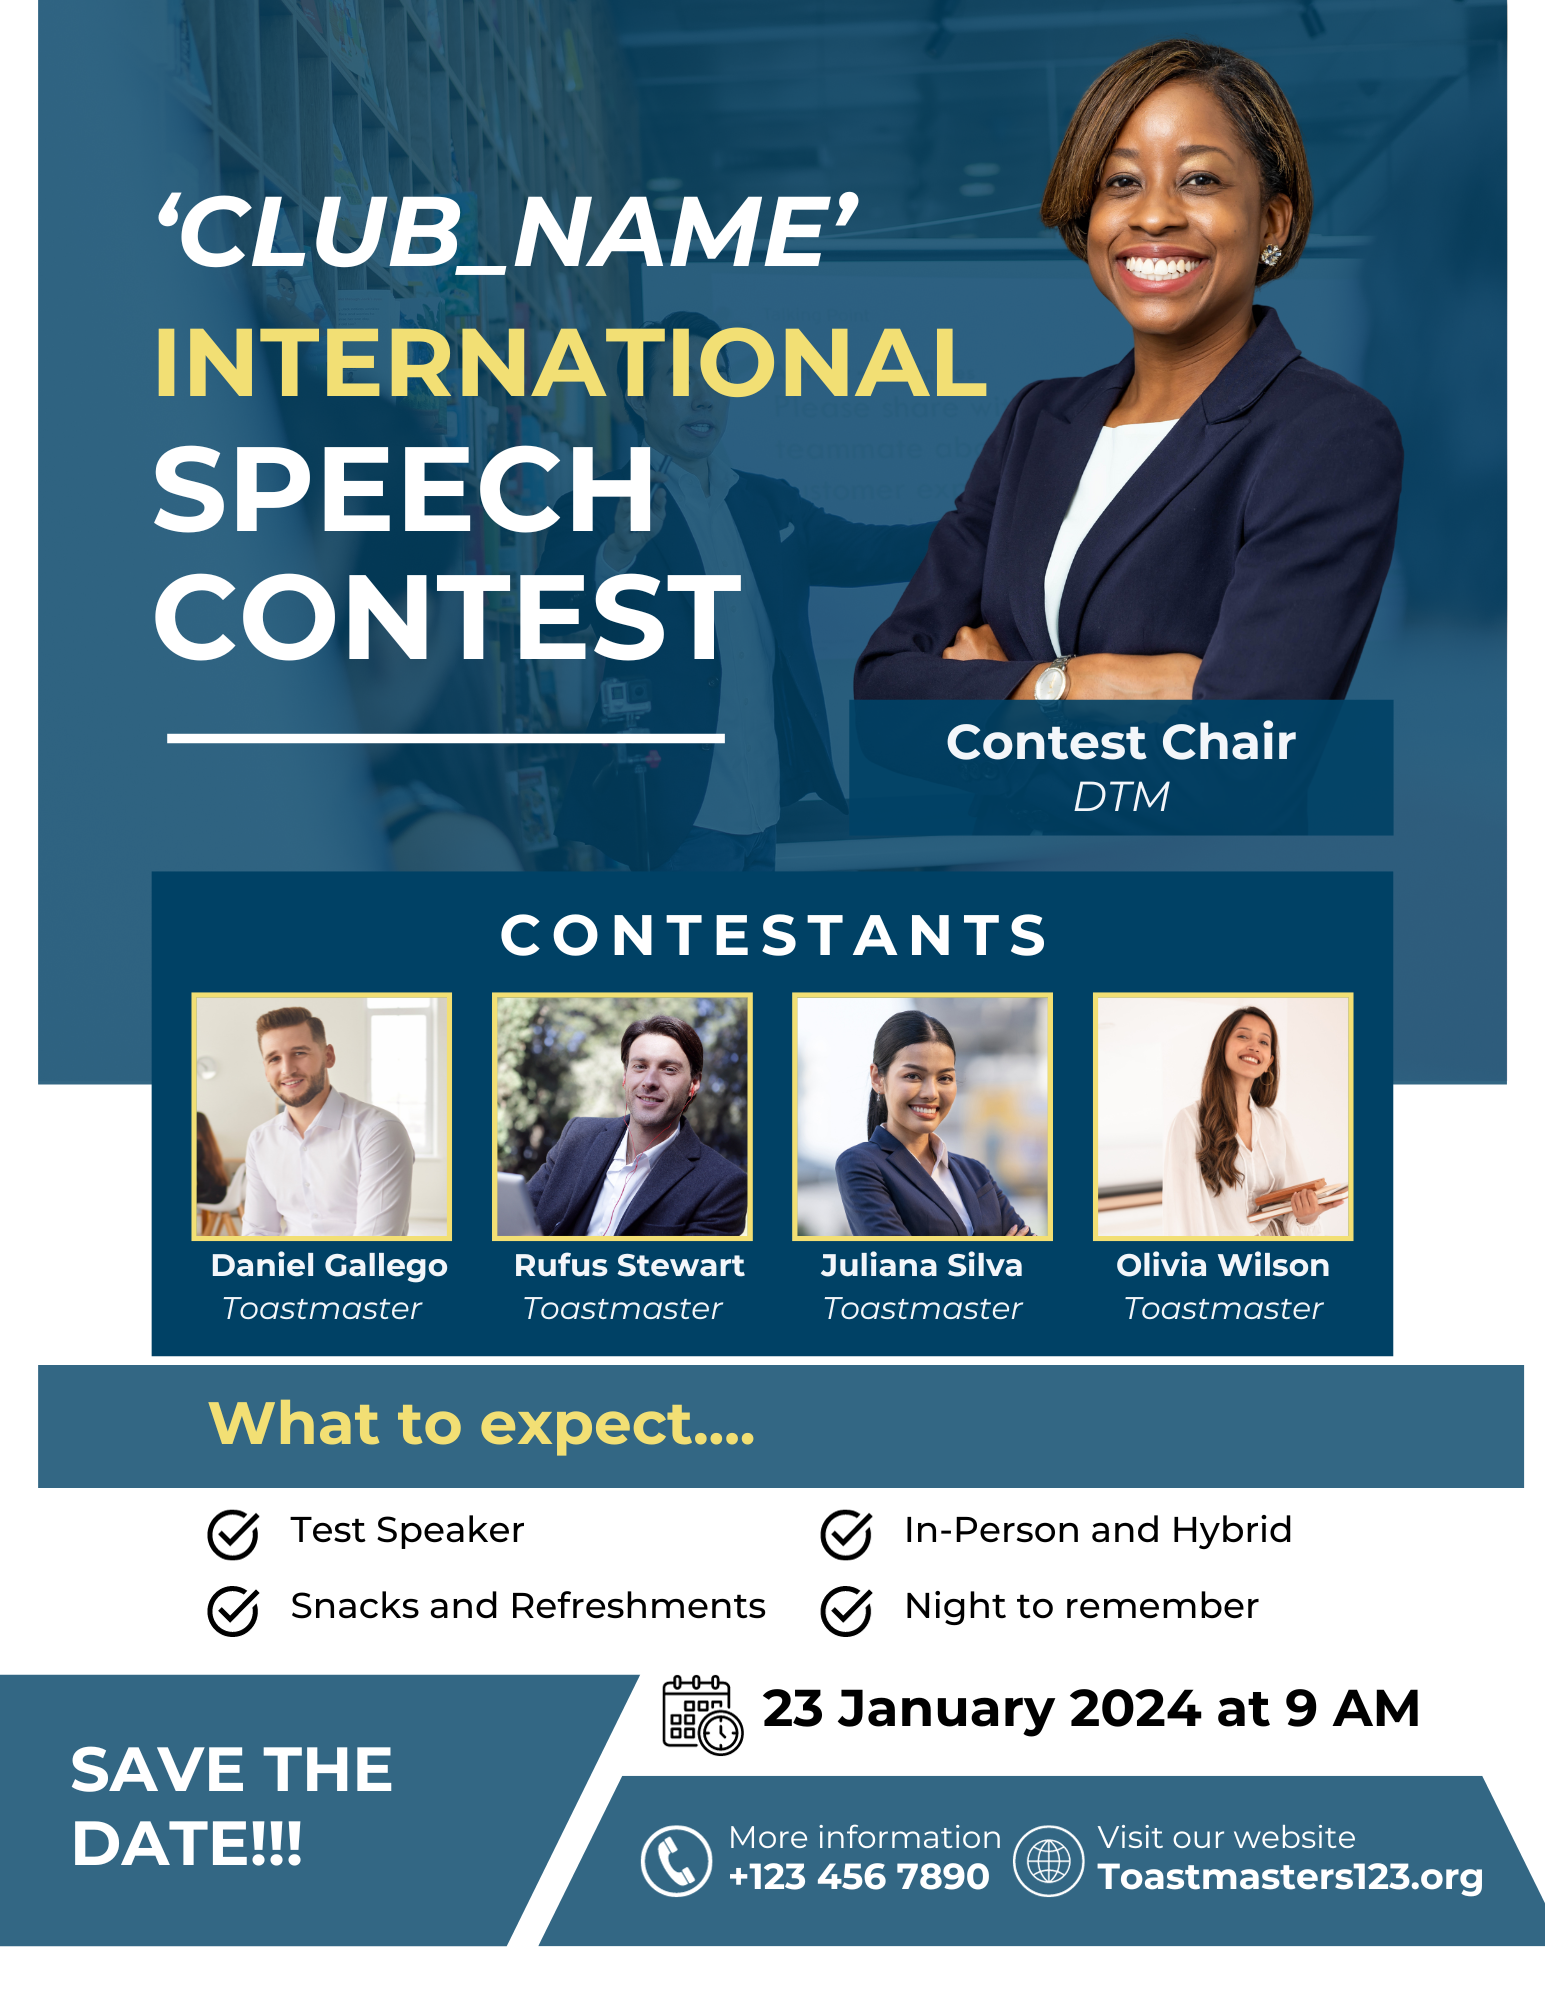 International Speech Contest - Club Level